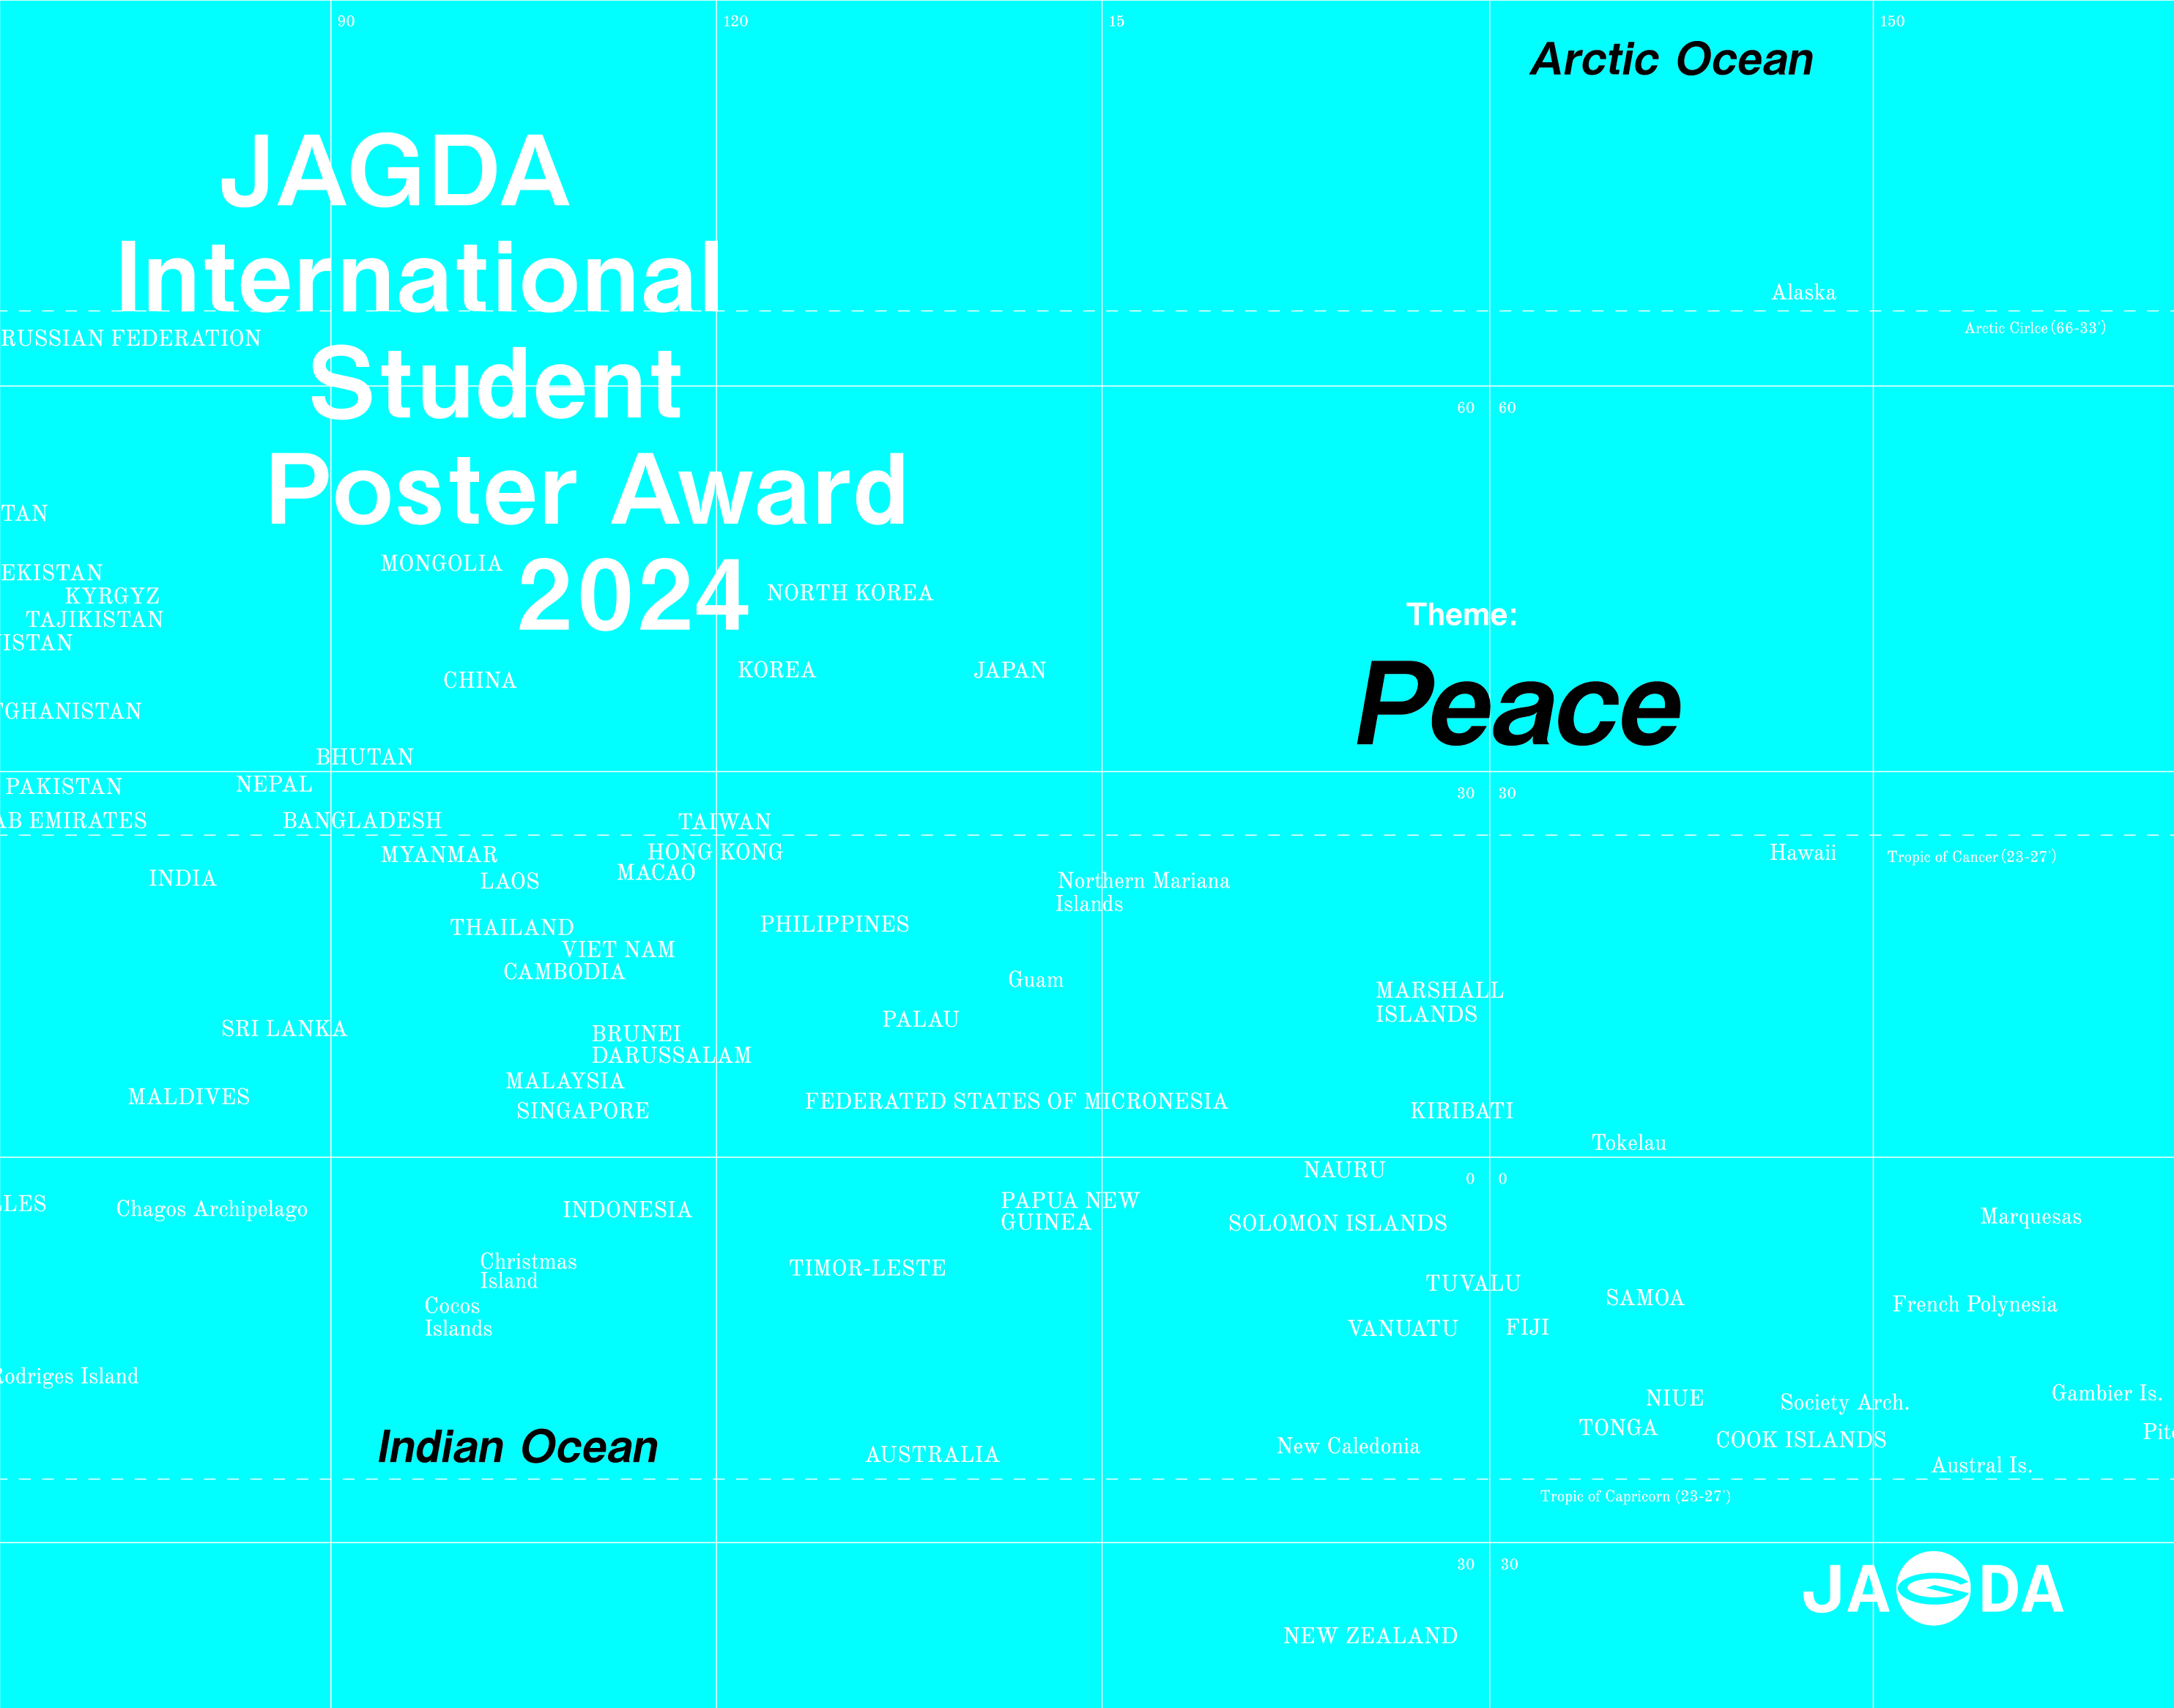 JAGDA INTERNATIONAL STUDENT POSTER AWARD 2022